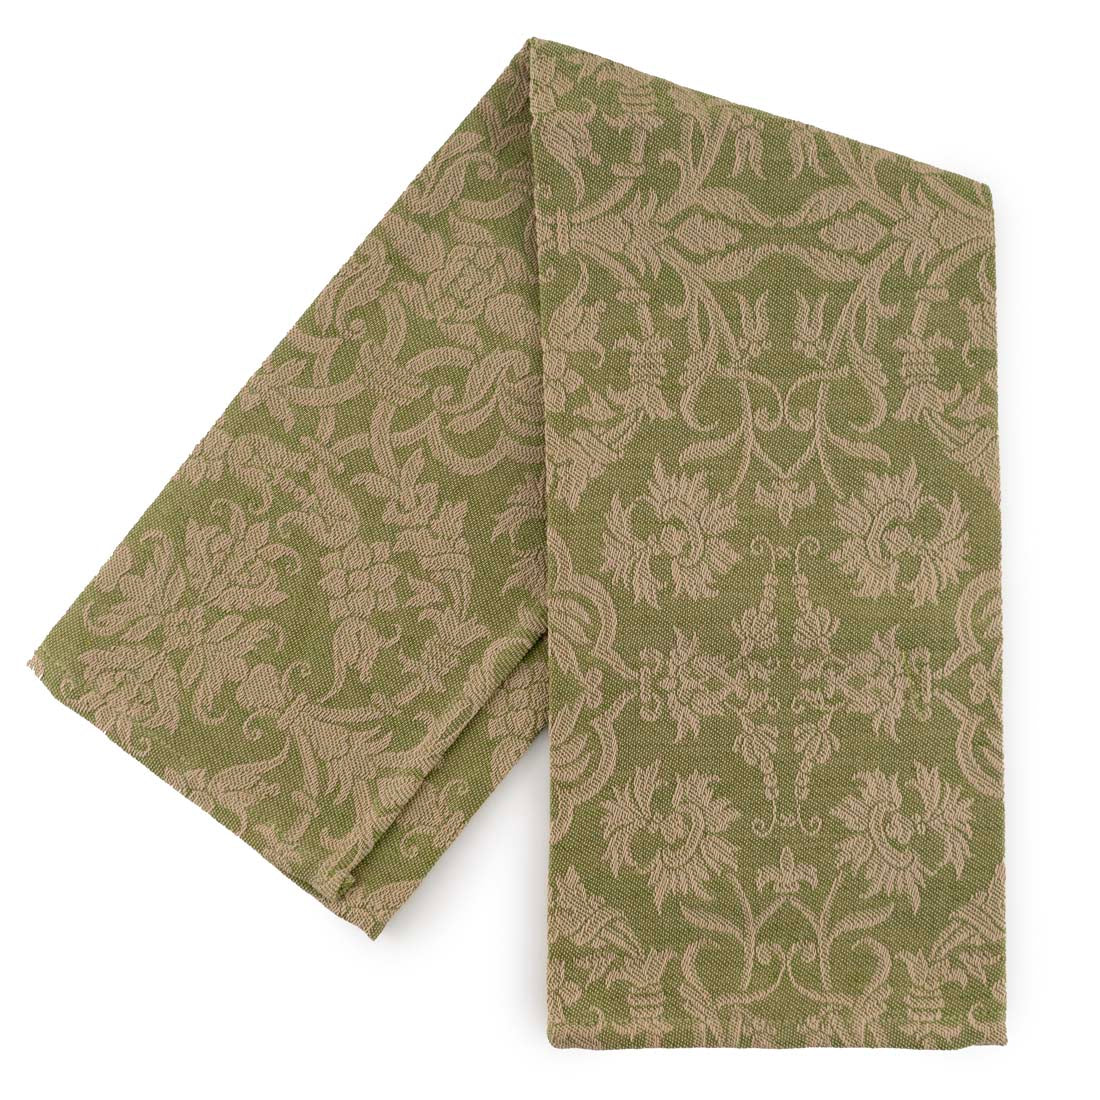 Green Imperial Jacquard Italian Linen Towel